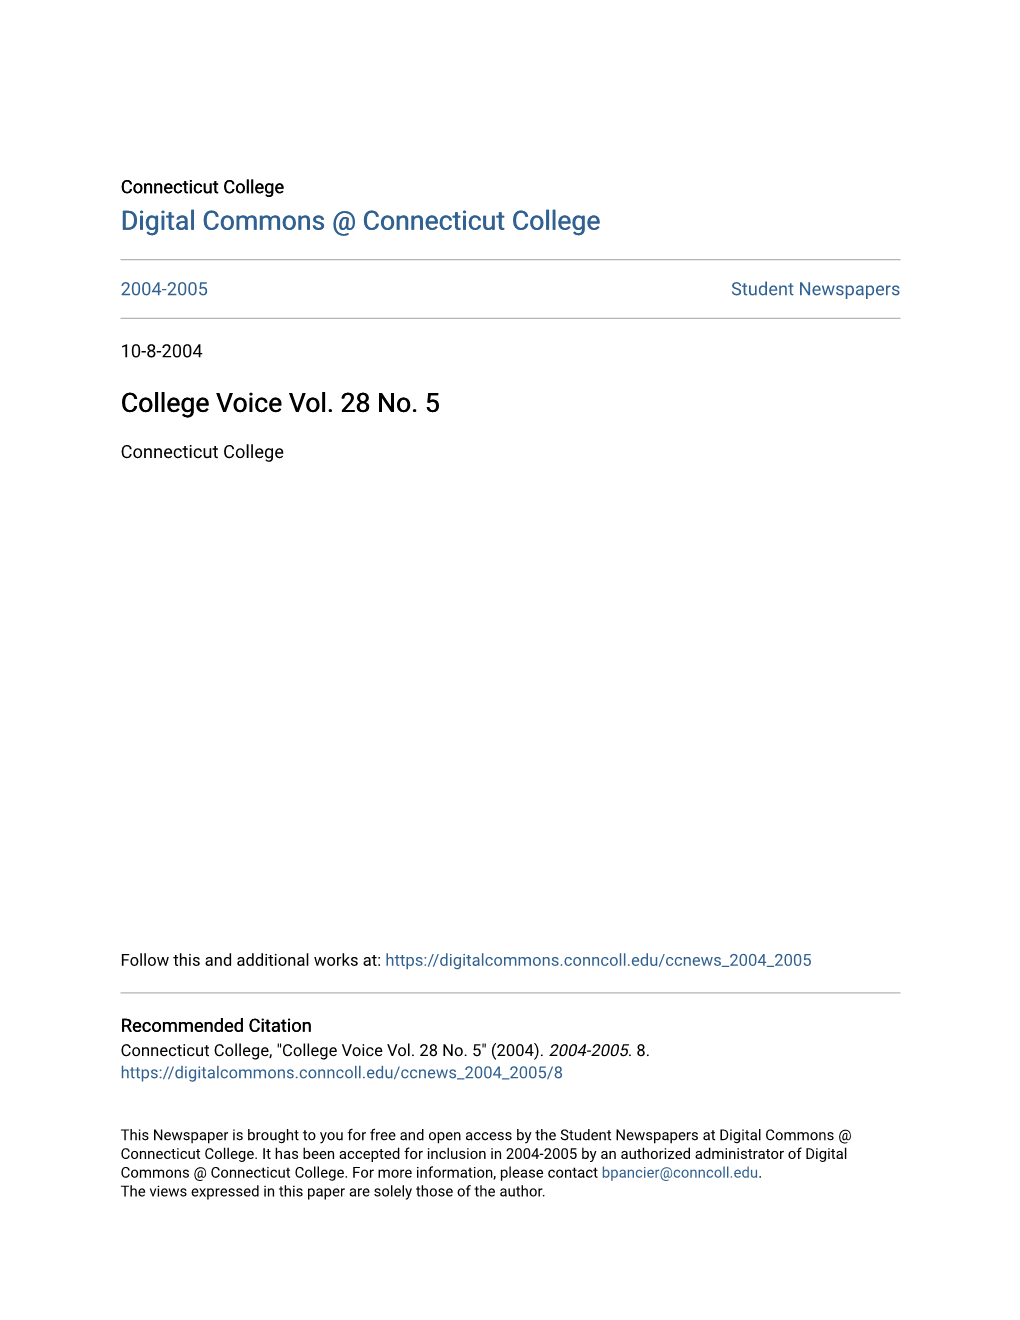 College Voice Vol. 28 No. 5